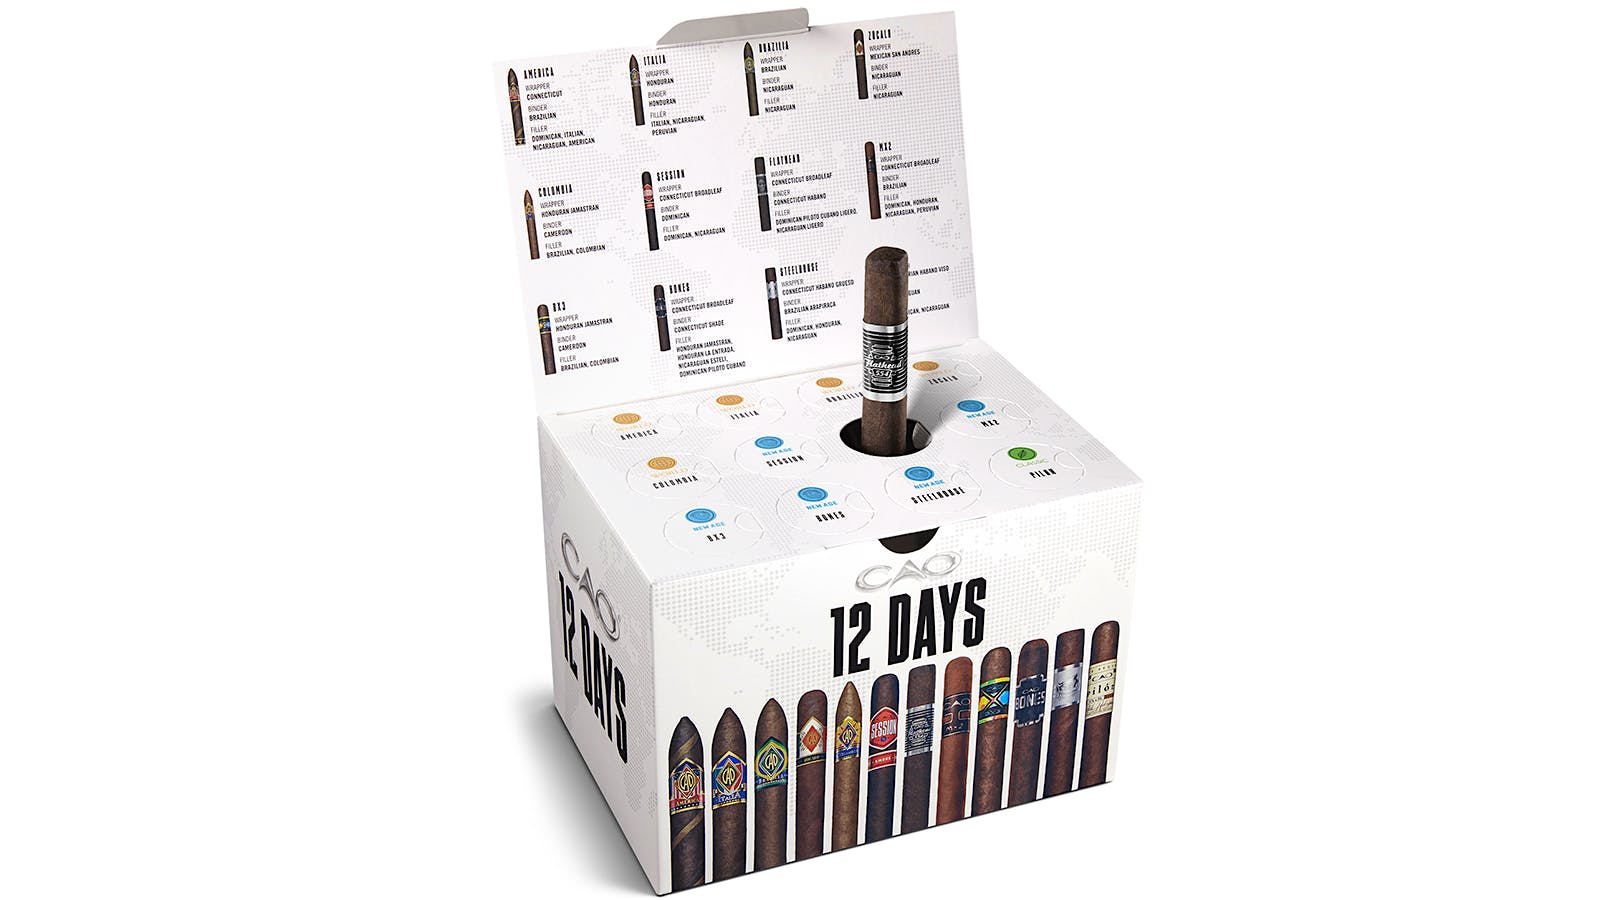 CAO Introduces A 12Day CigarThemed Advent Calendar For The Holiday